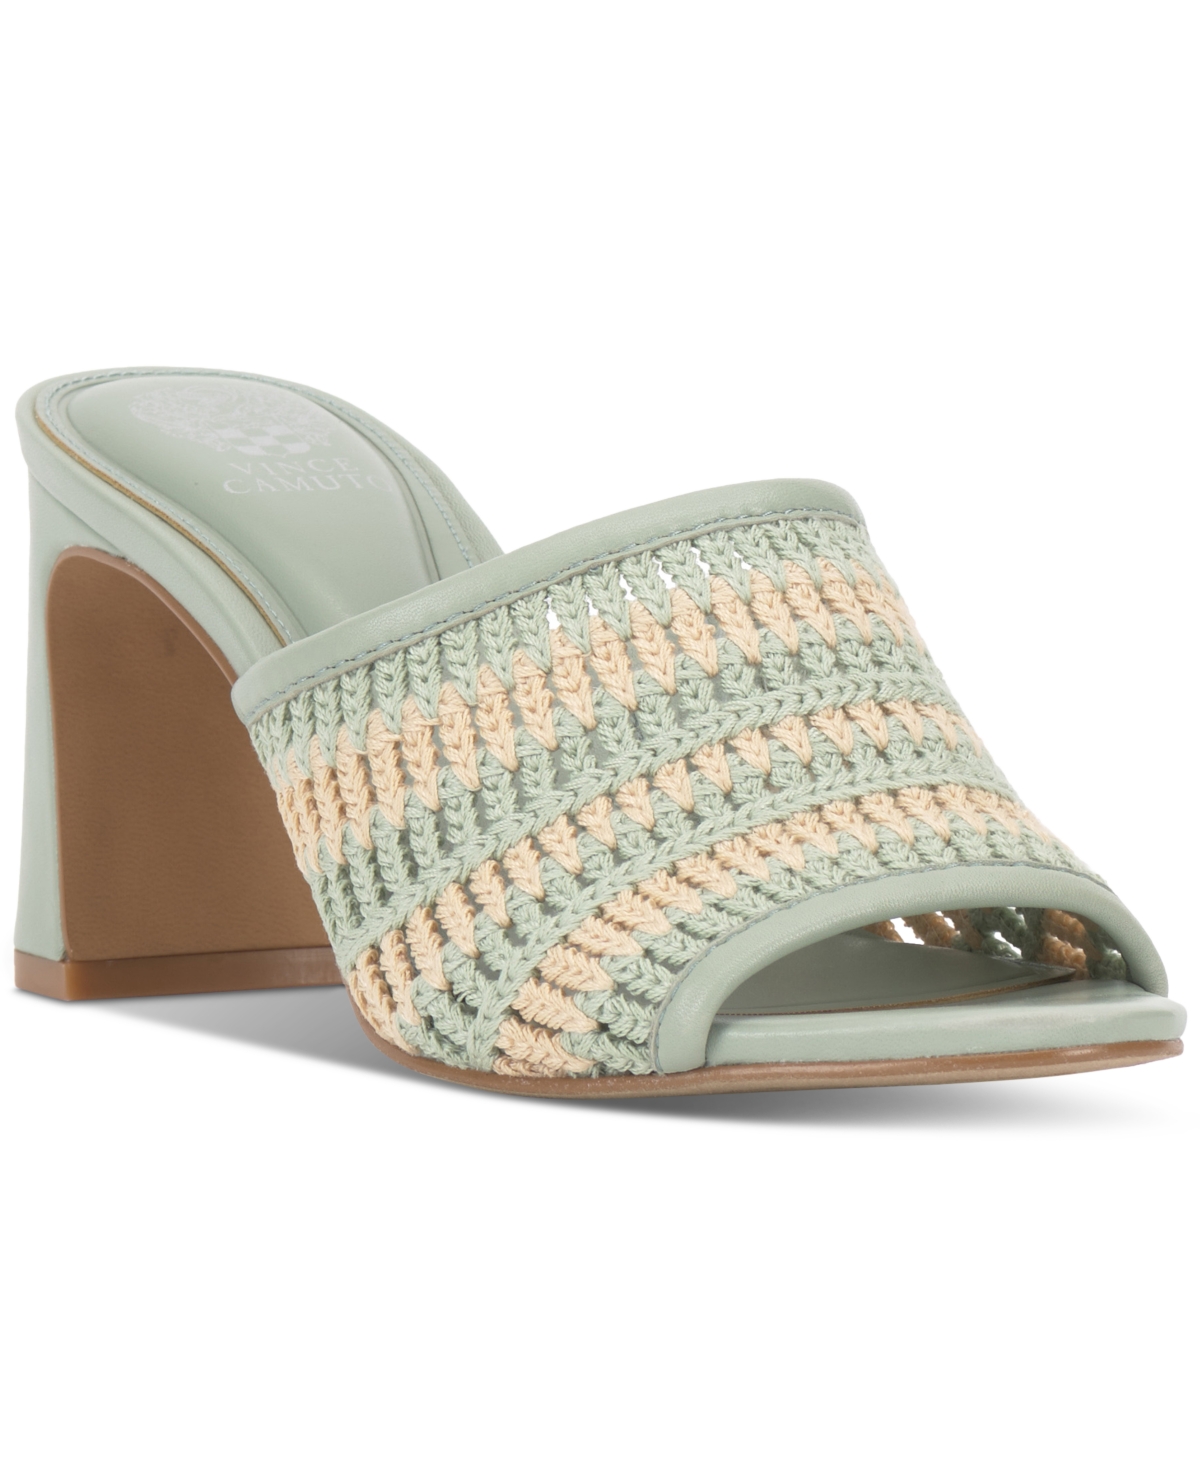 Women's Alyysa Slip-On Dress Sandals - Fresh Mint/Cream Woven